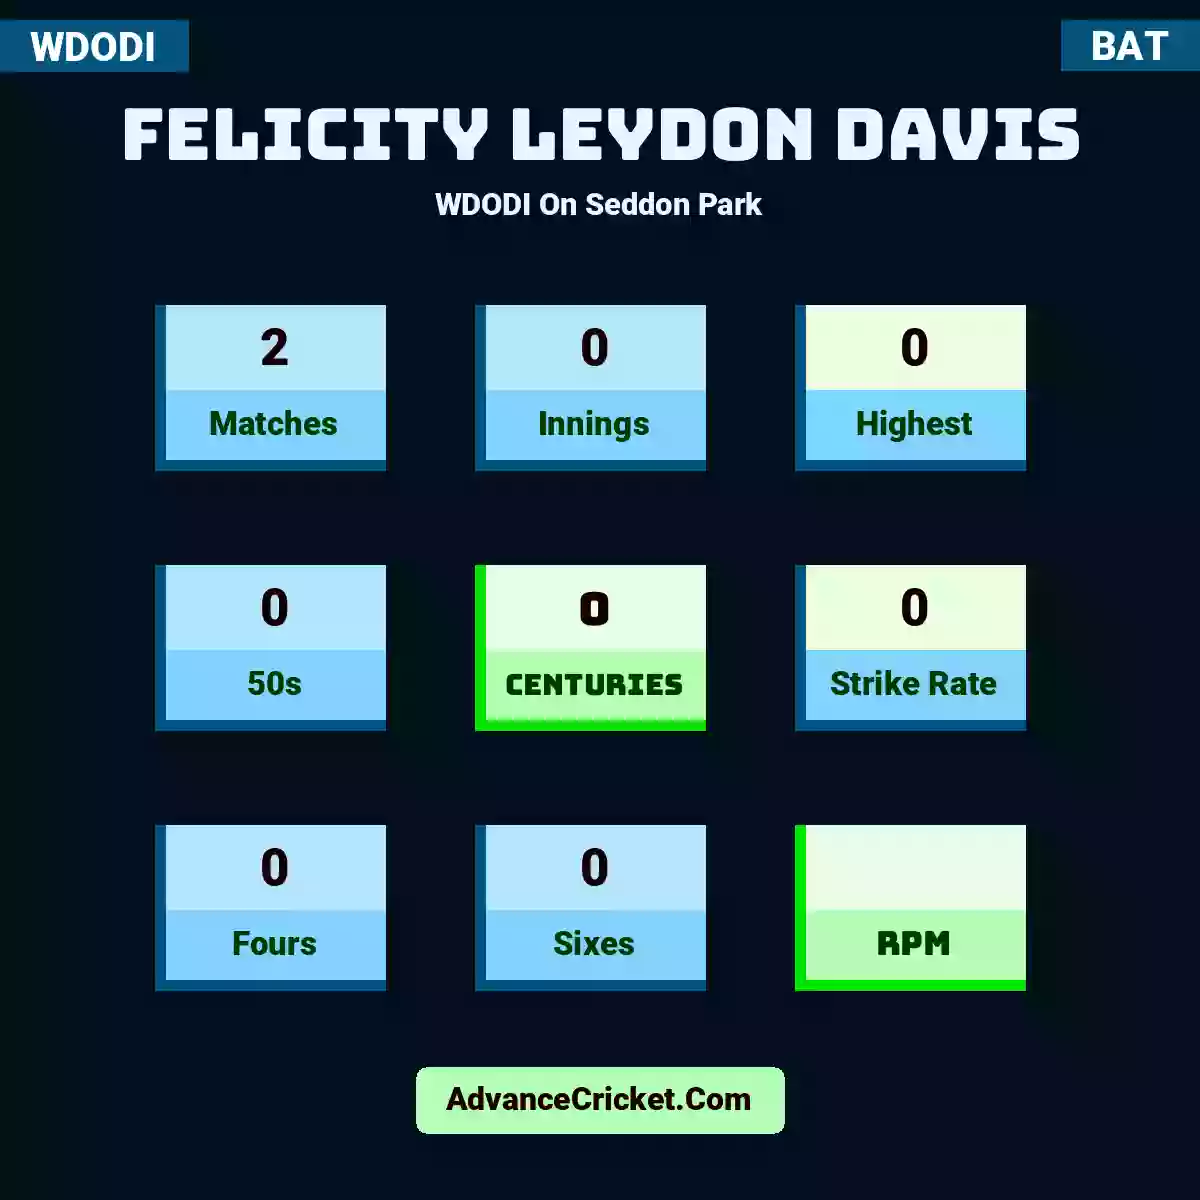 Felicity Leydon Davis WDODI  On Seddon Park, Felicity Leydon Davis played 2 matches, scored 0 runs as highest, 0 half-centuries, and 0 centuries, with a strike rate of 0. F.Davis hit 0 fours and 0 sixes.